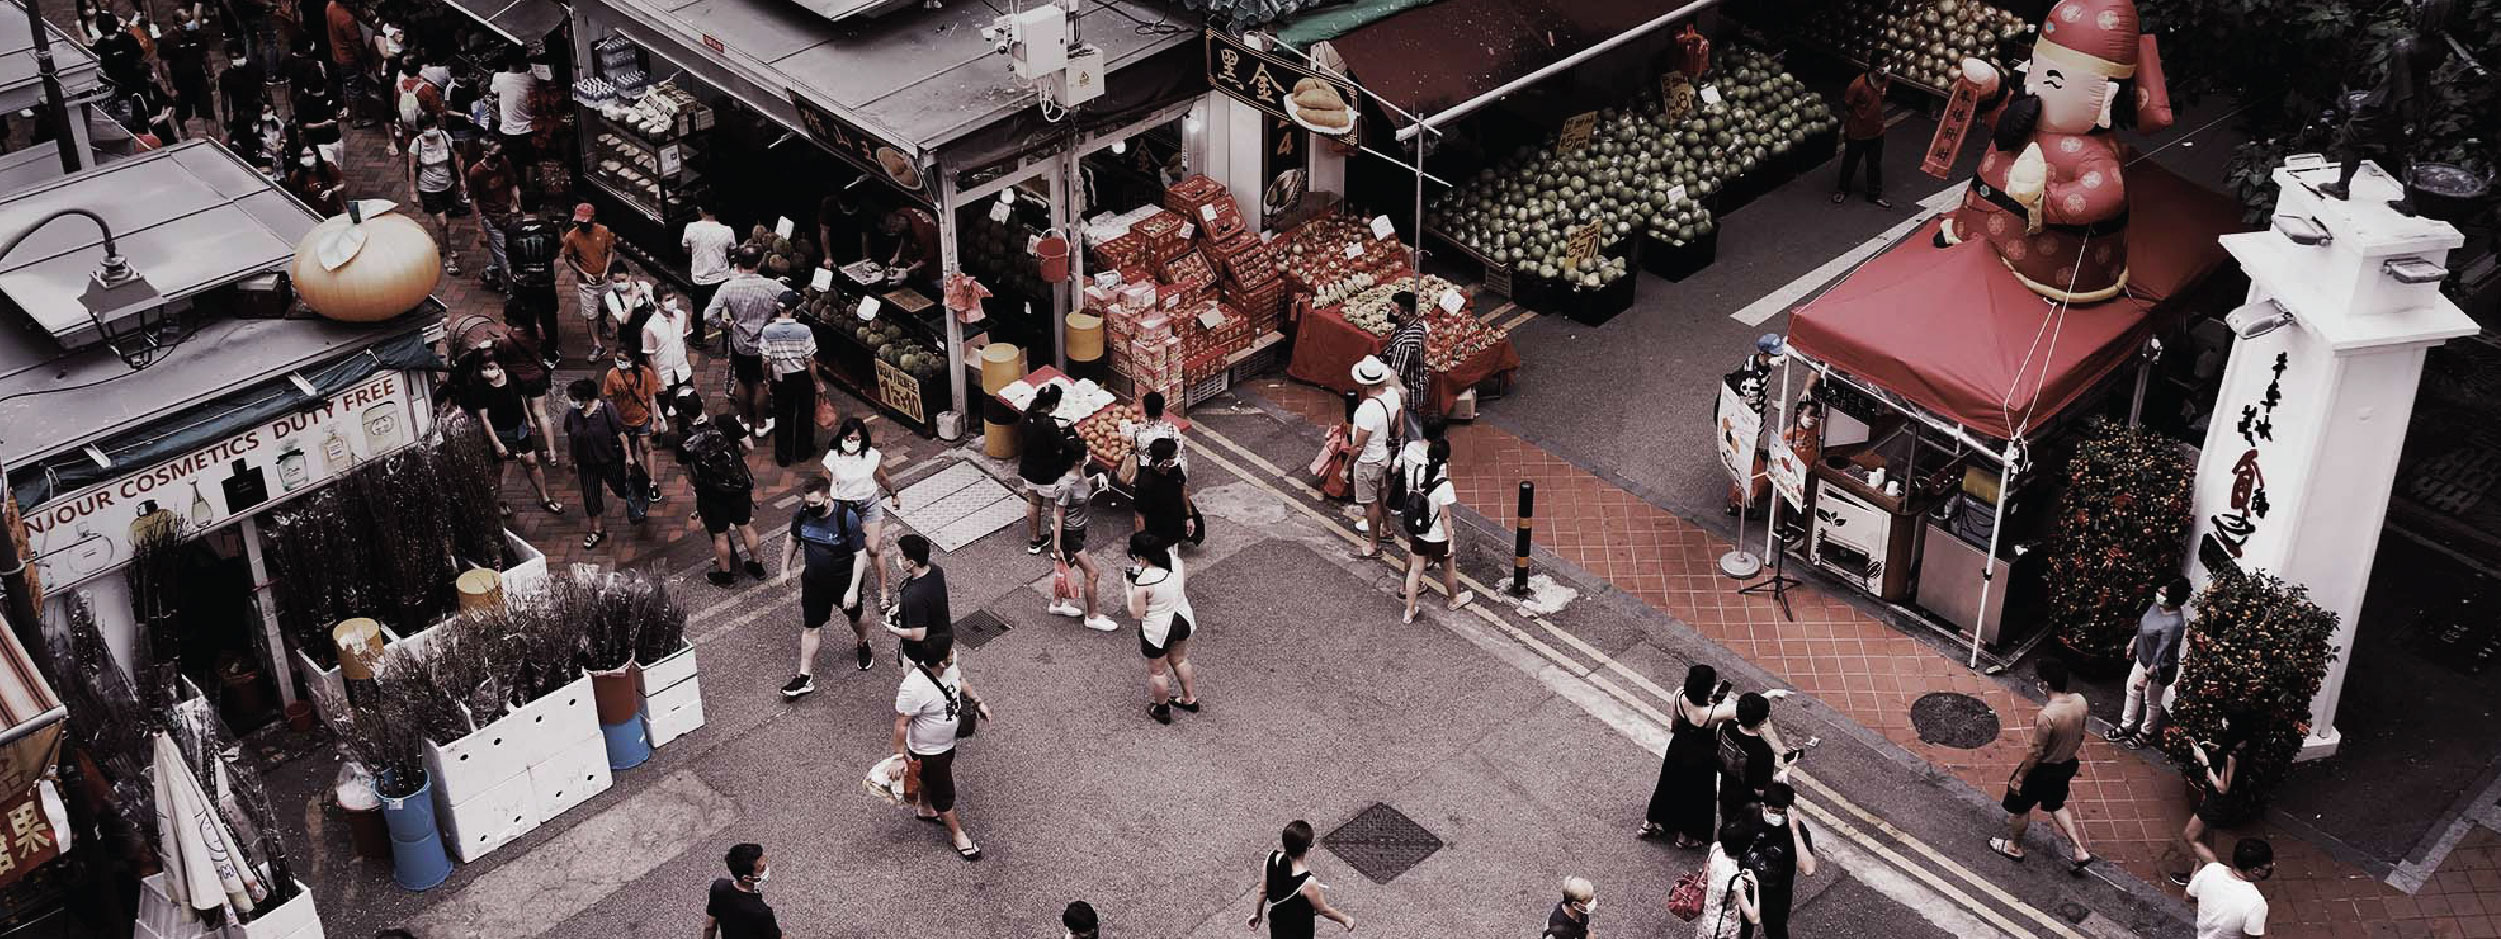 People walking in Singapore's Chinatown subzone